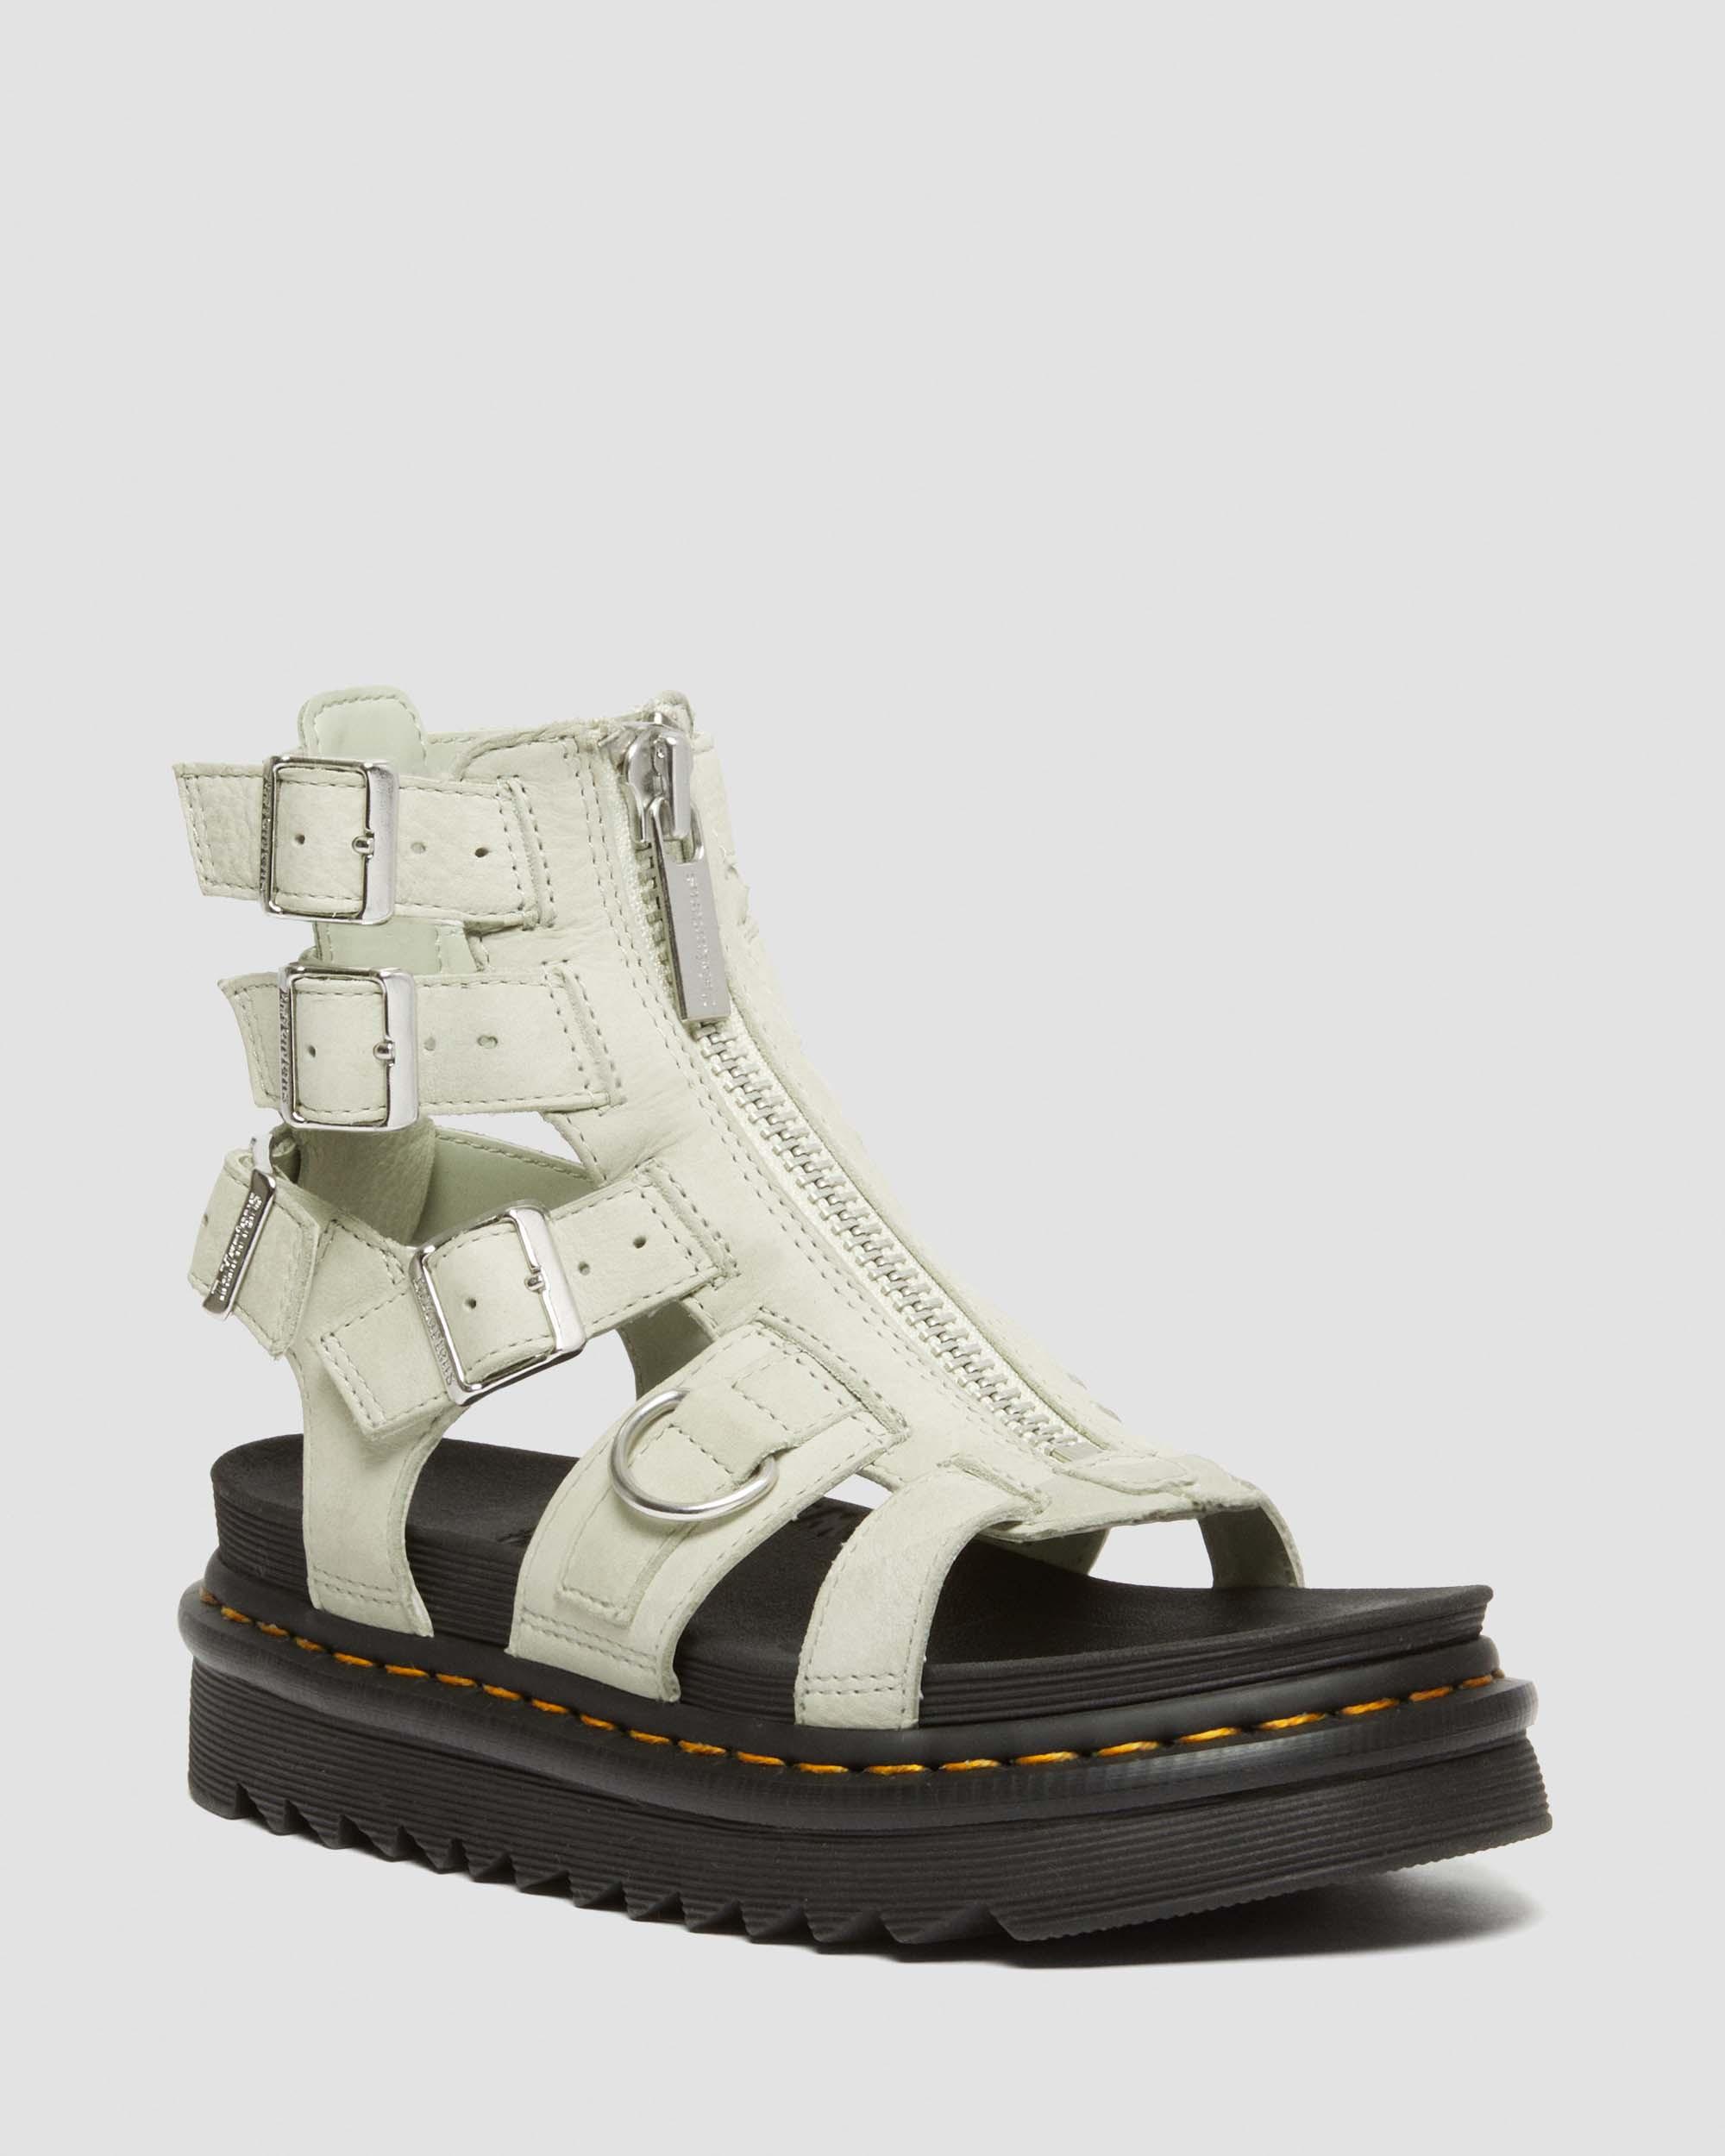 Sandali con zip Olson stile gladiatore in pelle nabuk bottalata